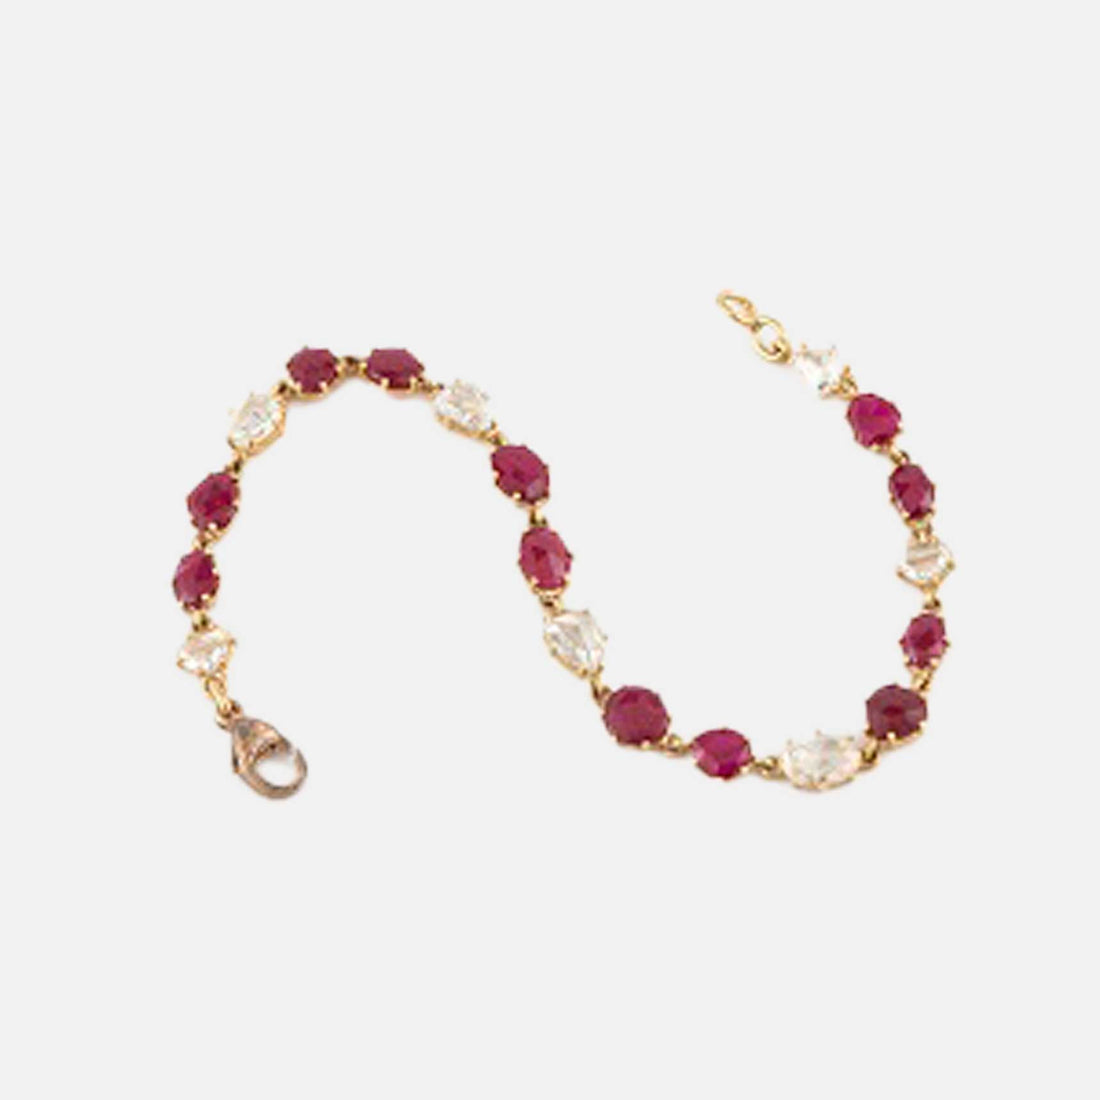 Mixed shape ruby and rose cut diamond bracelet